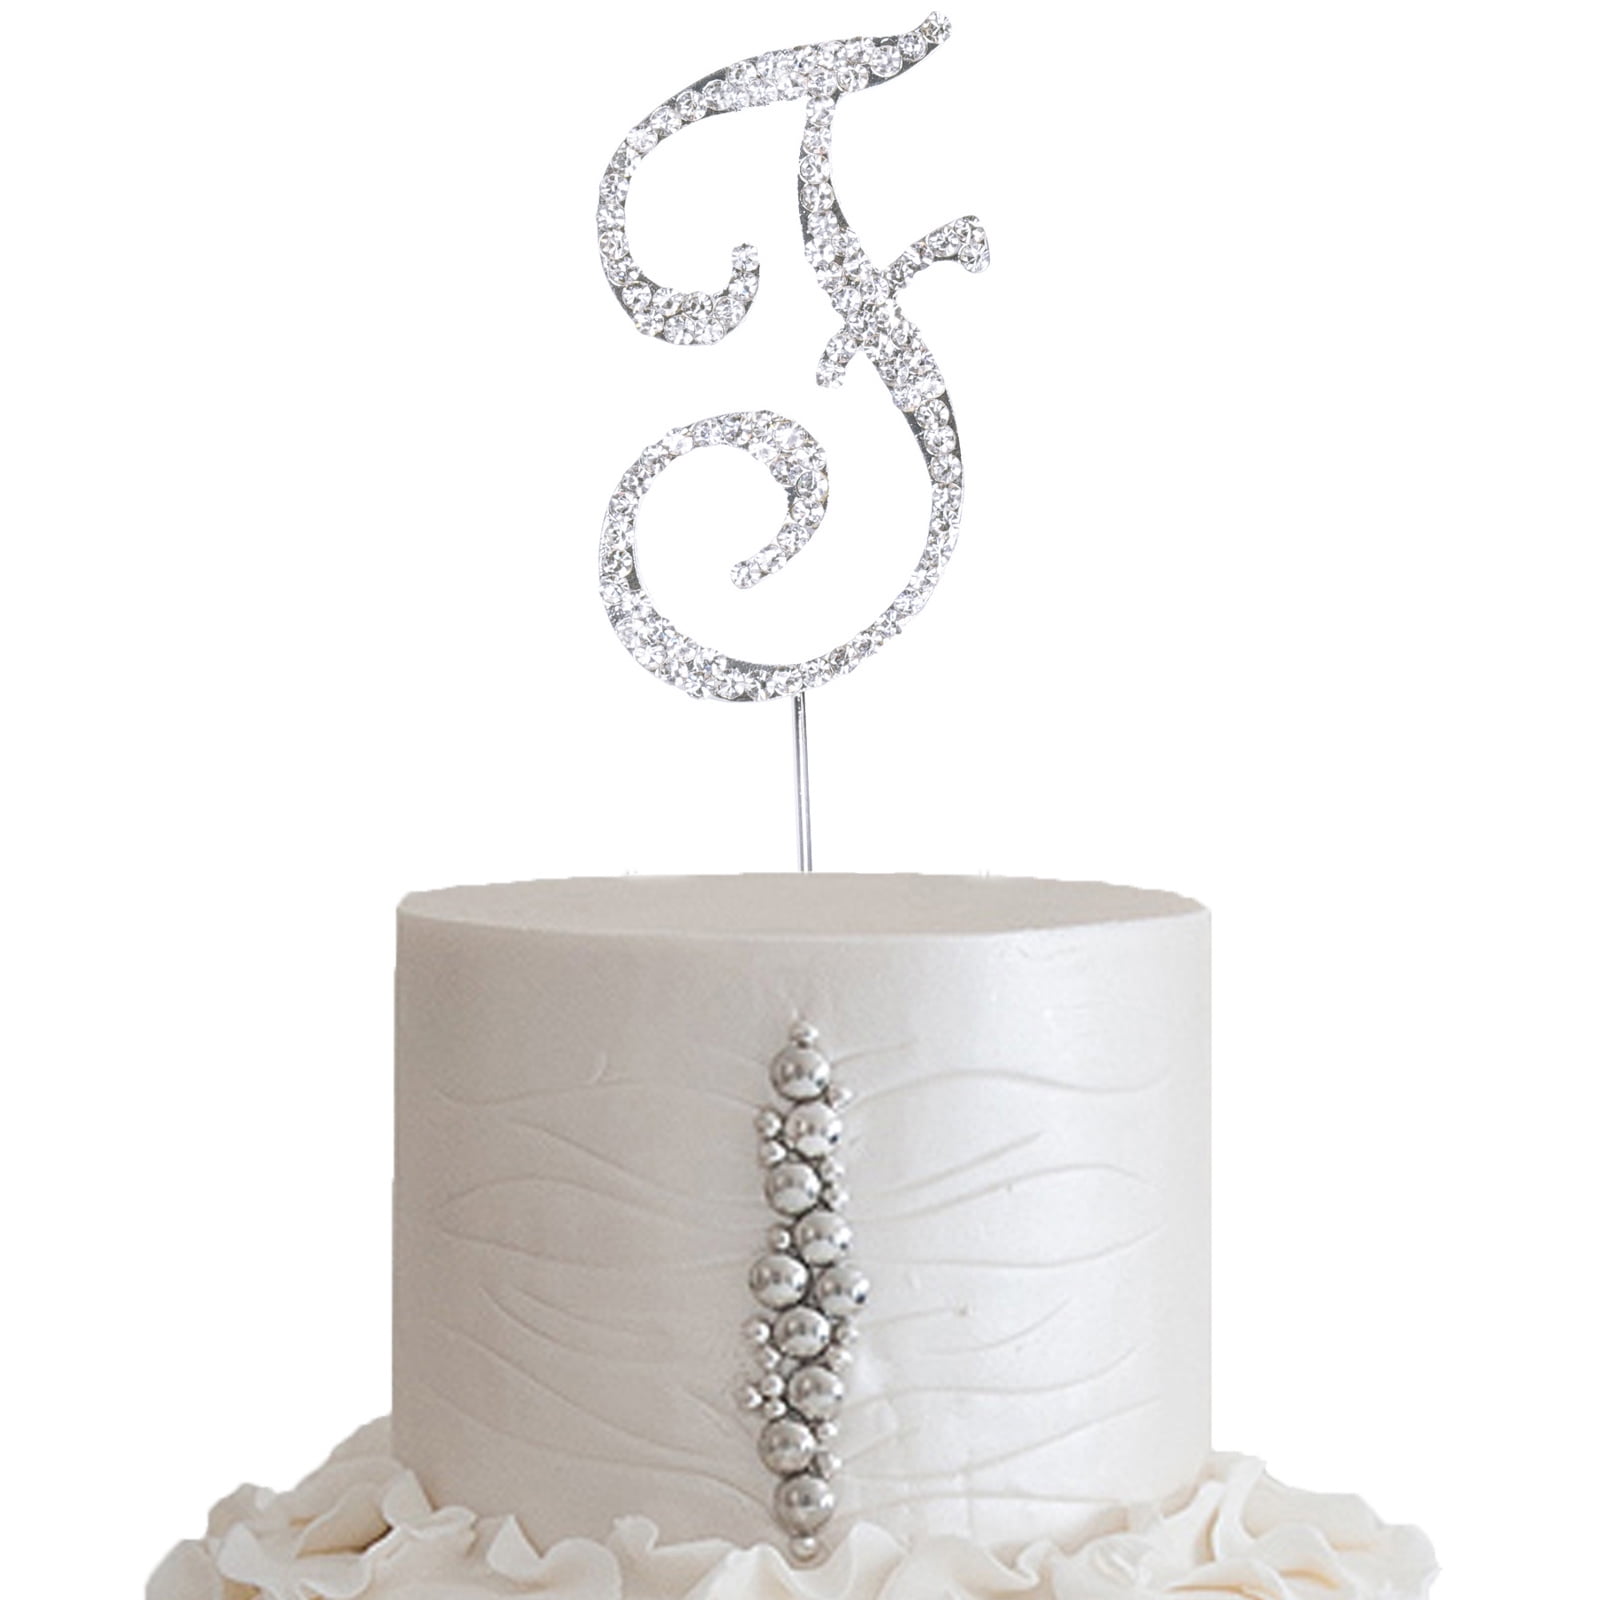 GOLD Plated Rhinestone  Monogram Letter “S”  Wedding Cake Topper  5" inch high 